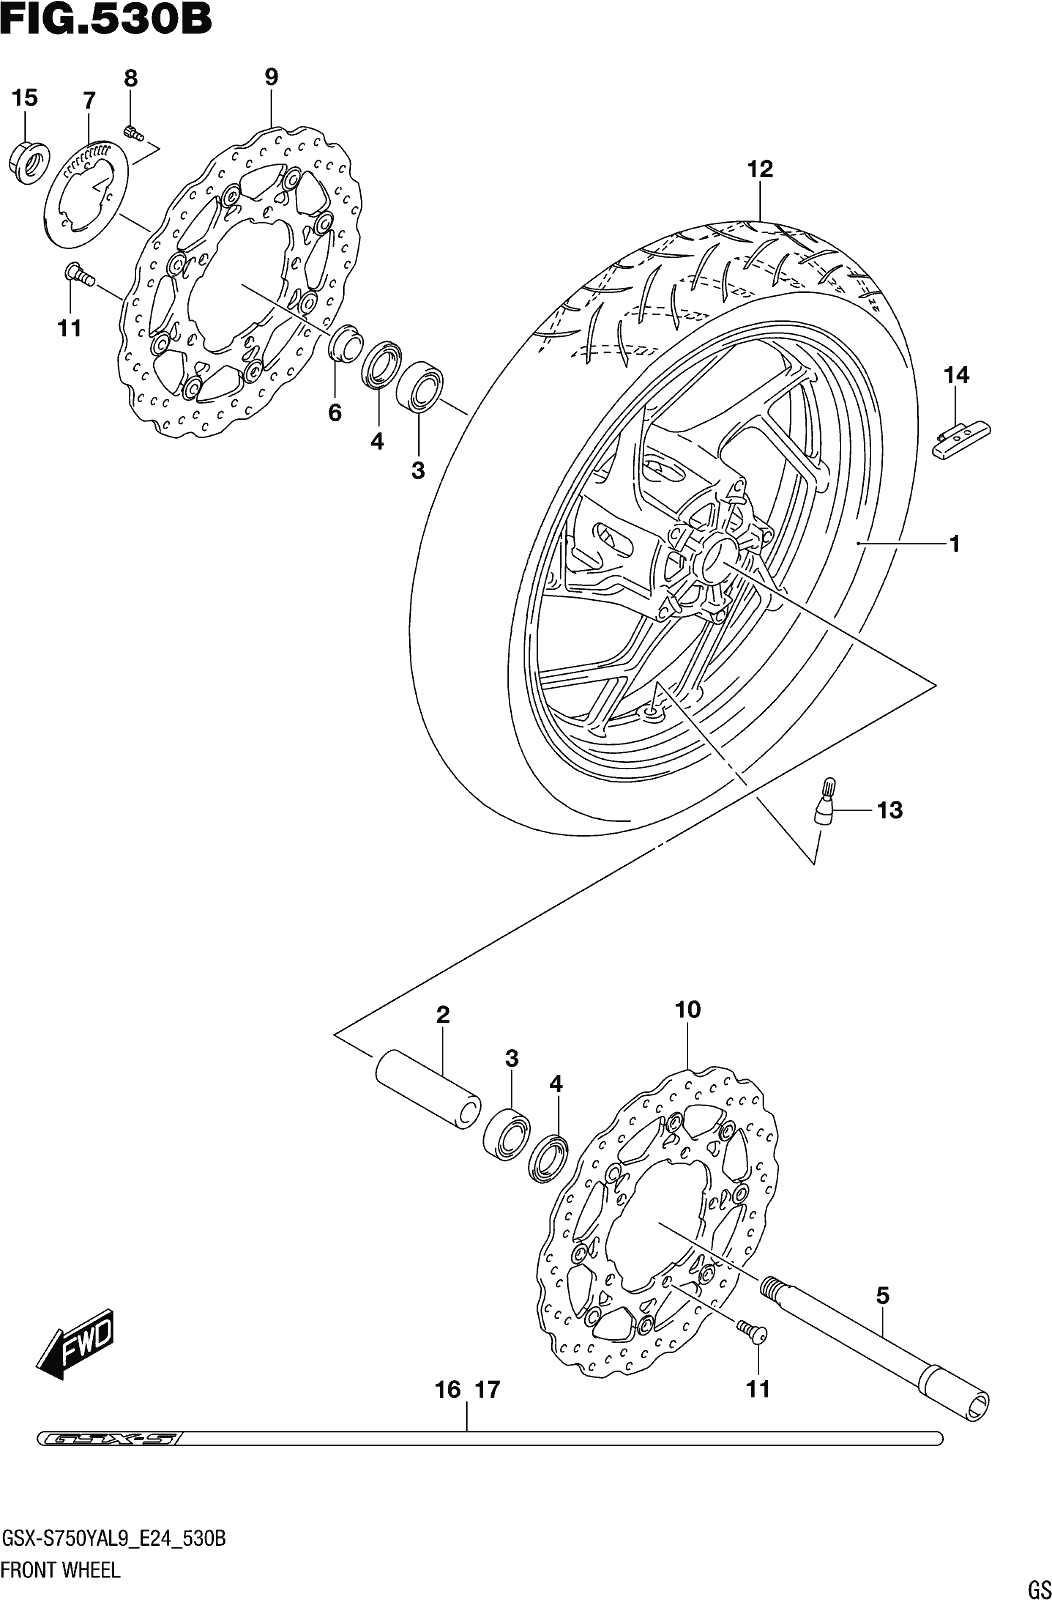 Fig.530b Front Wheel (gsx-s750zal9 E24)